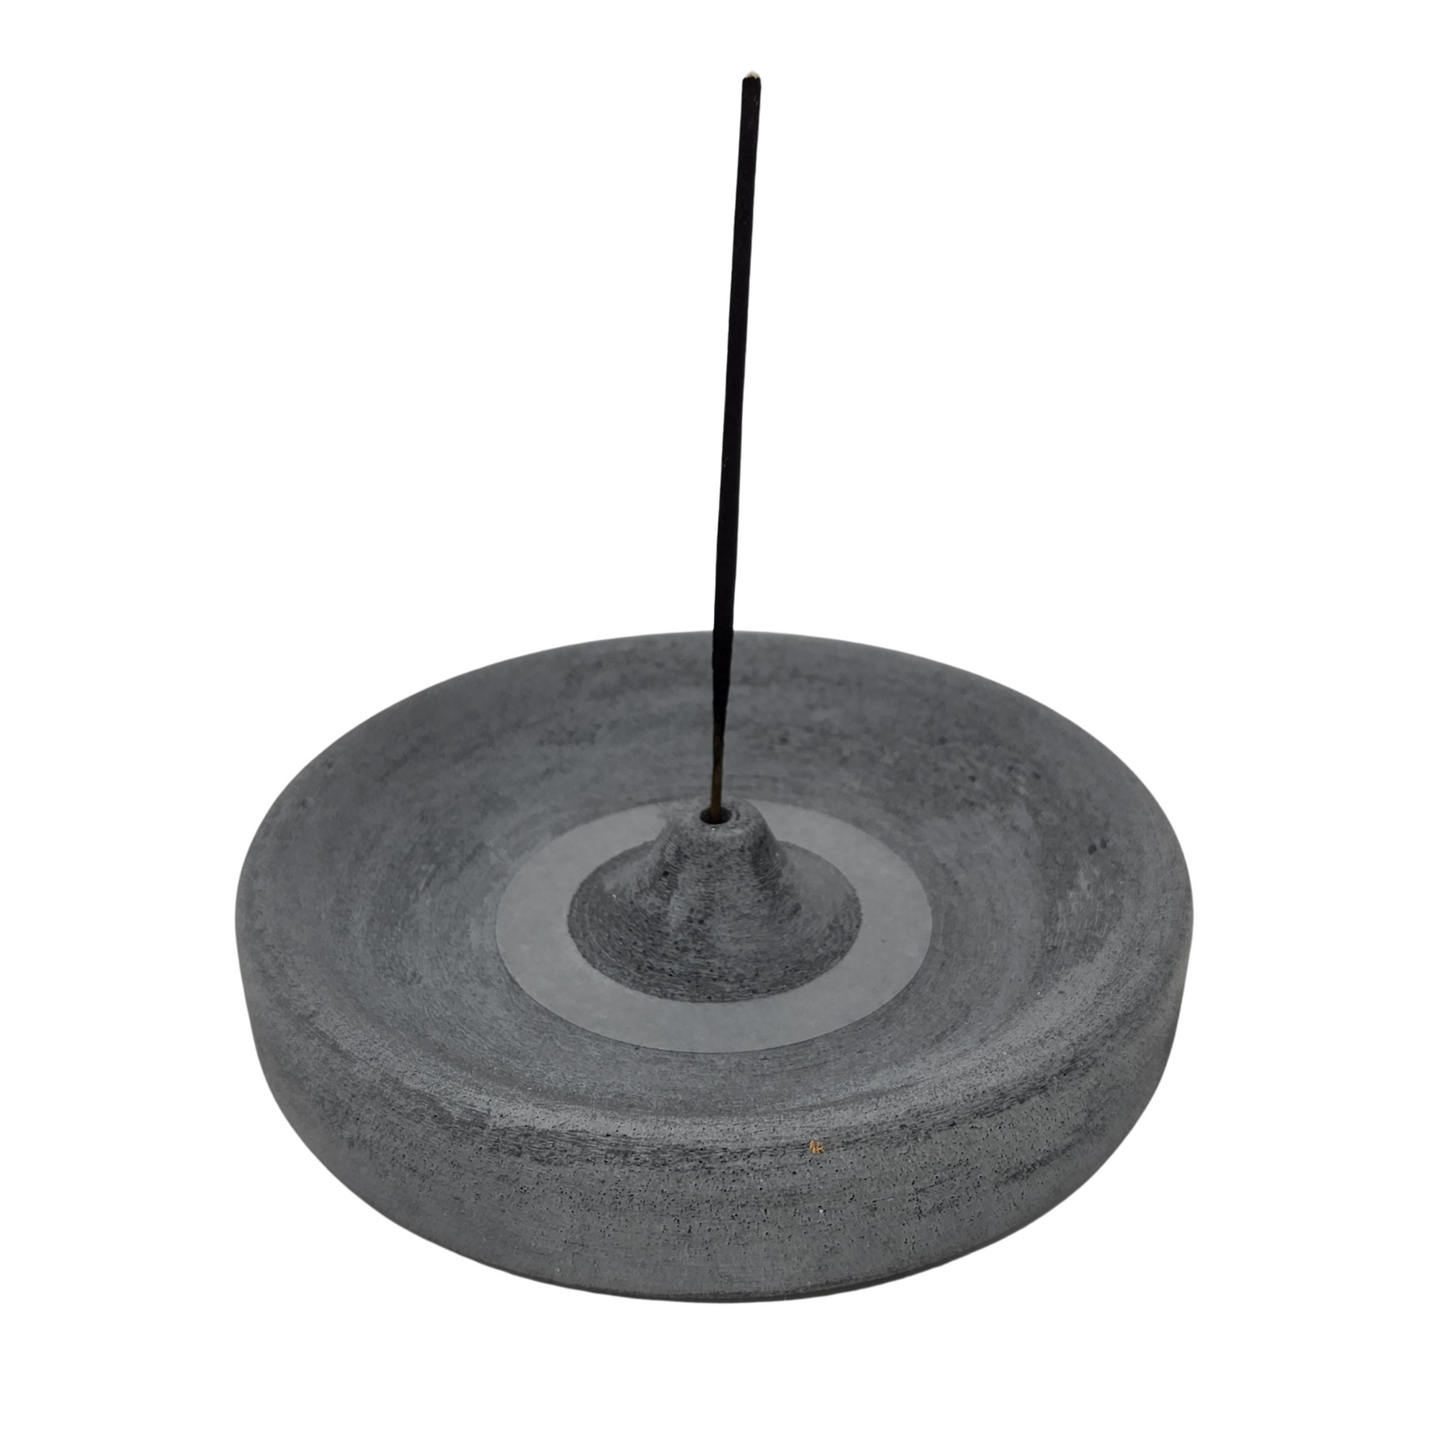 5"x1" Incense Burner | Concrete Round Moon